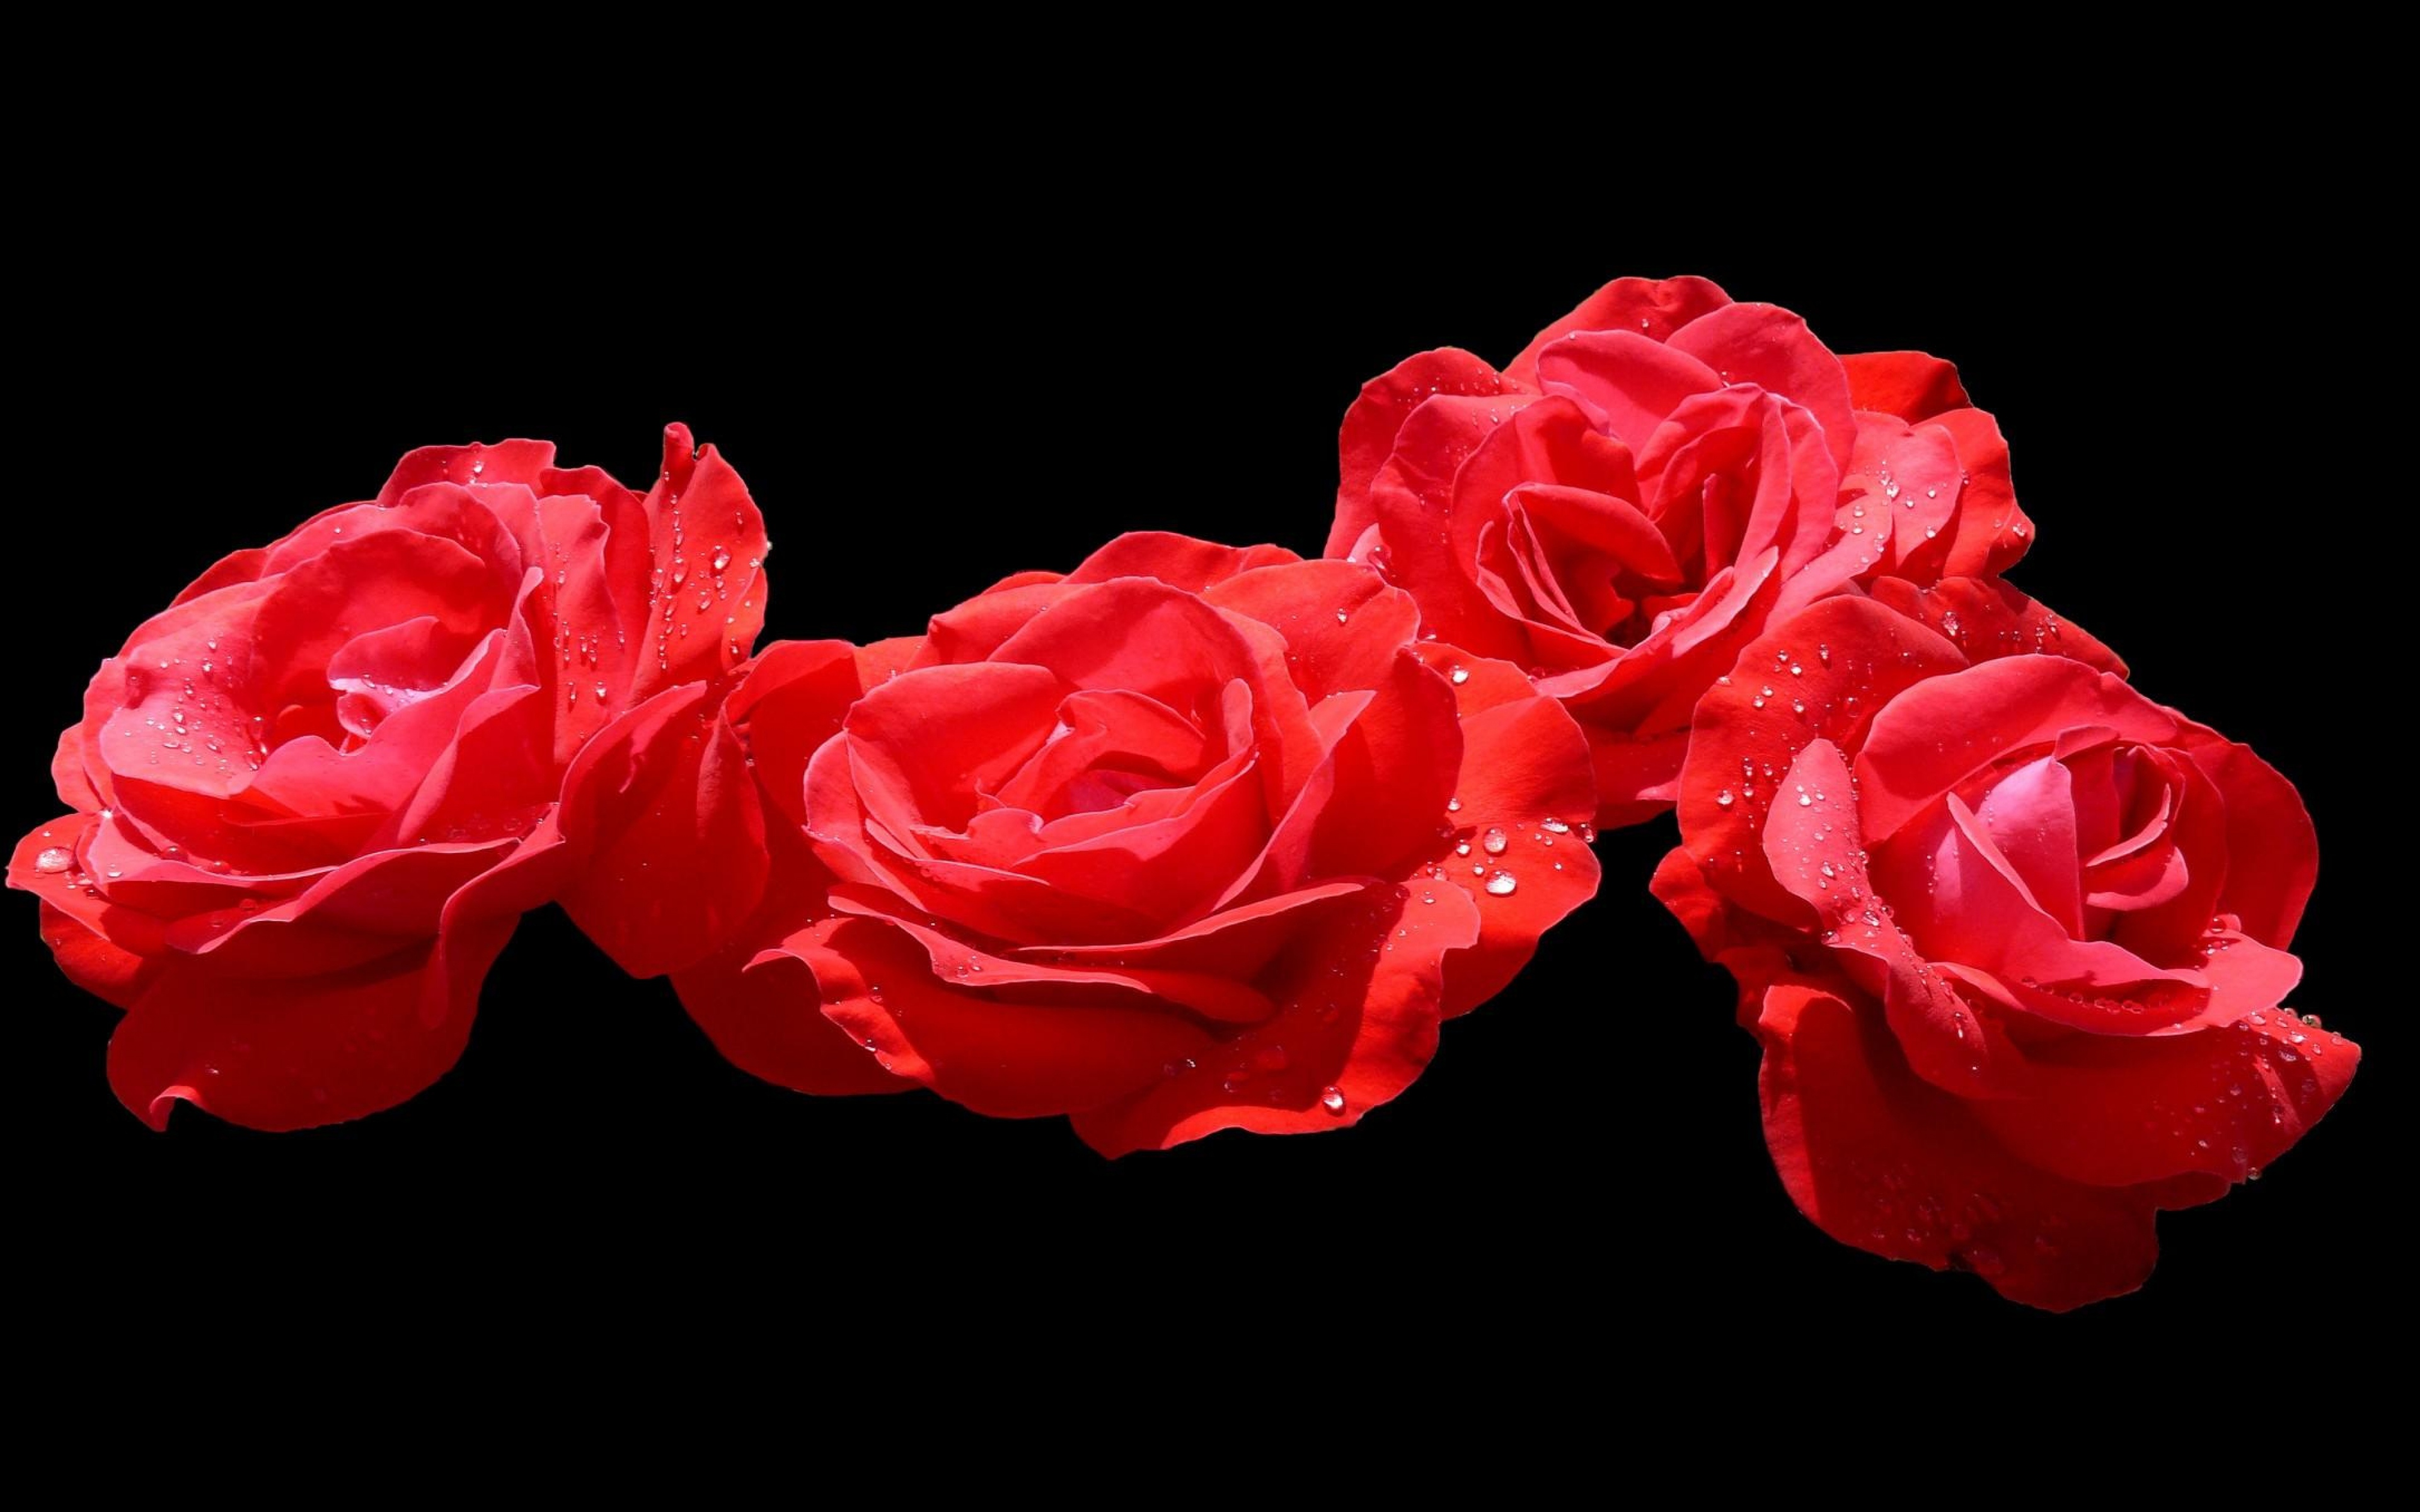 Wallpaper Rose Buds Red Drops Black Background